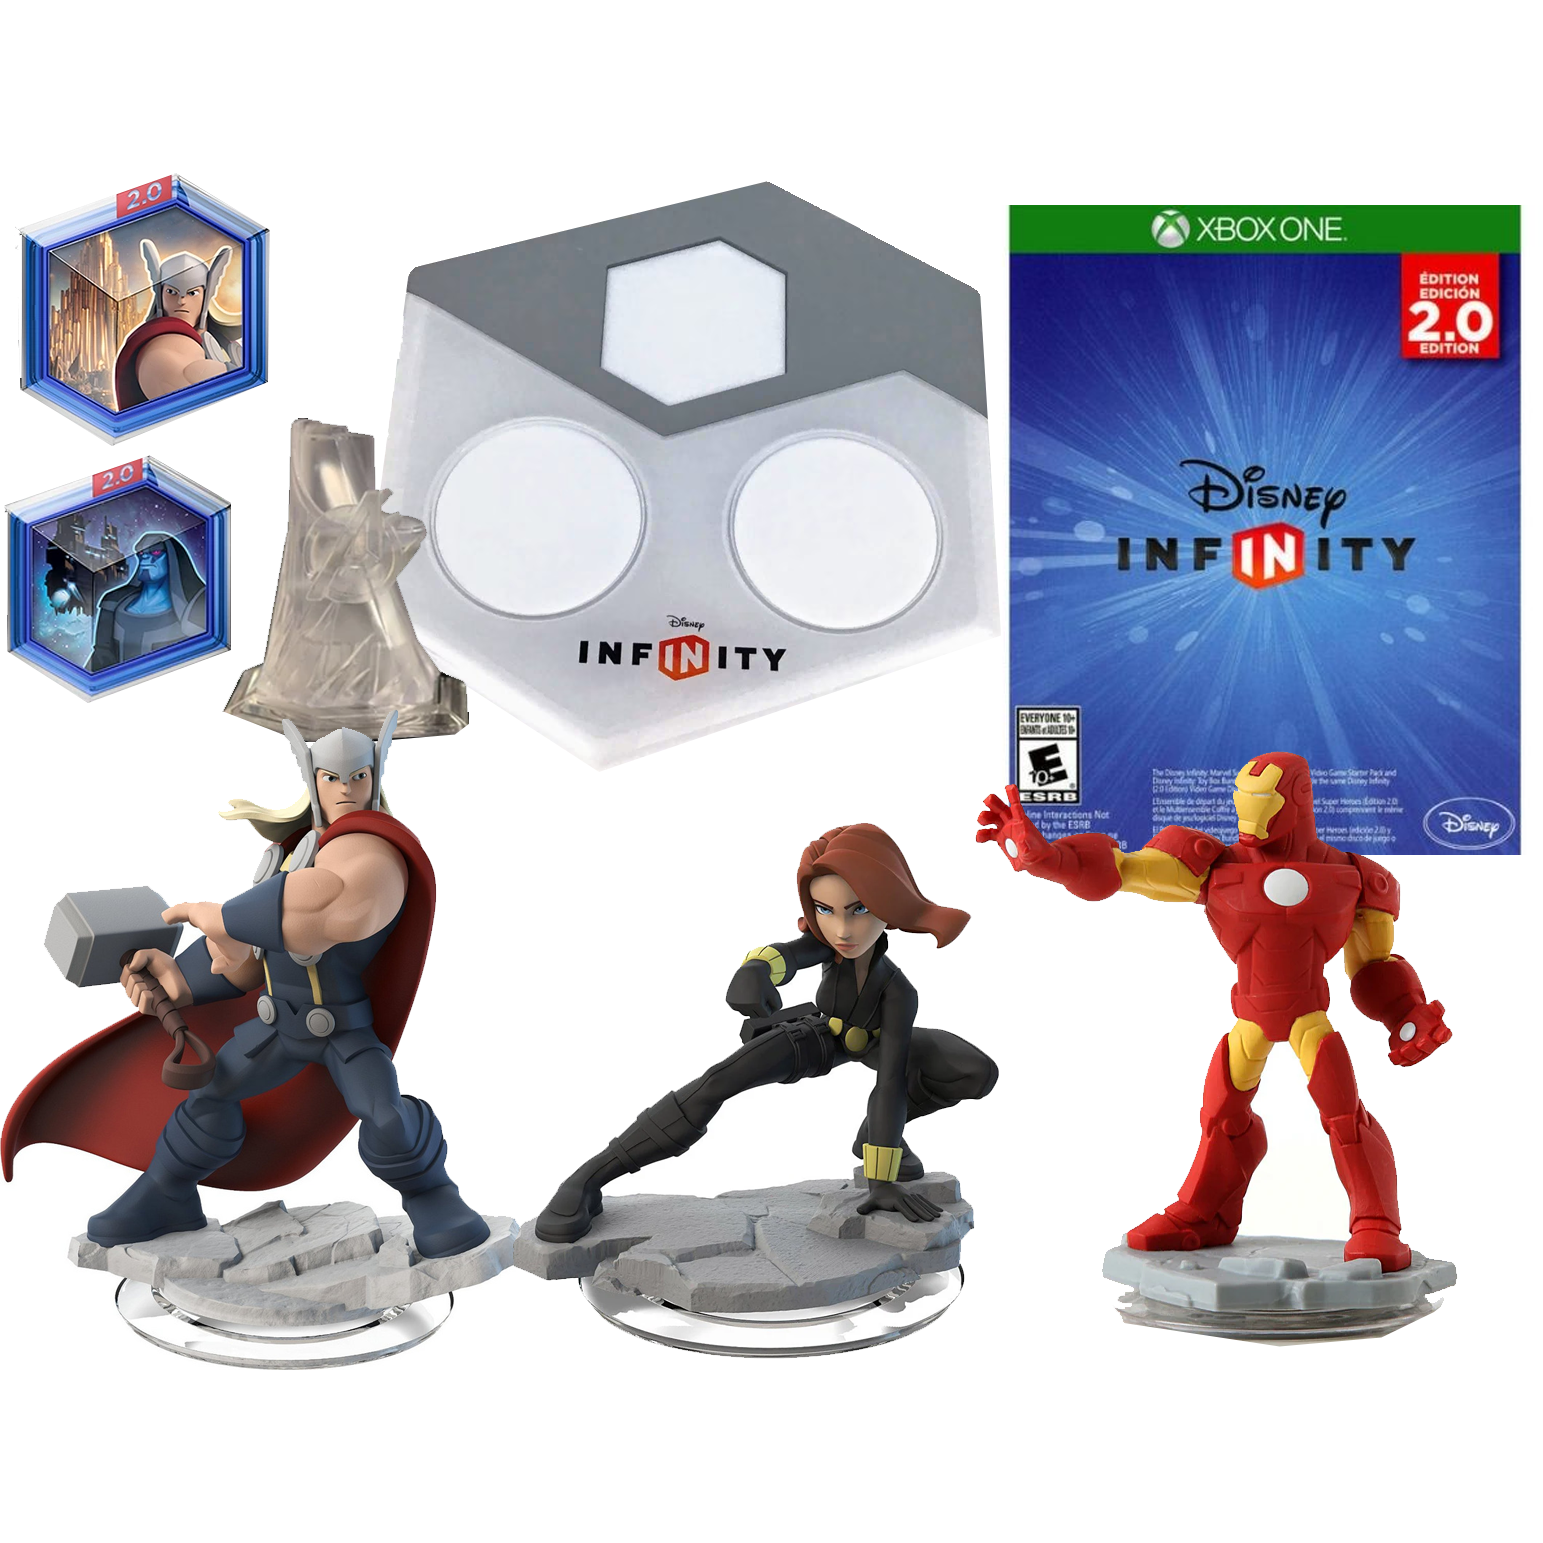 XBOX ONE - Disney Infinity 2.0 Starter Pack